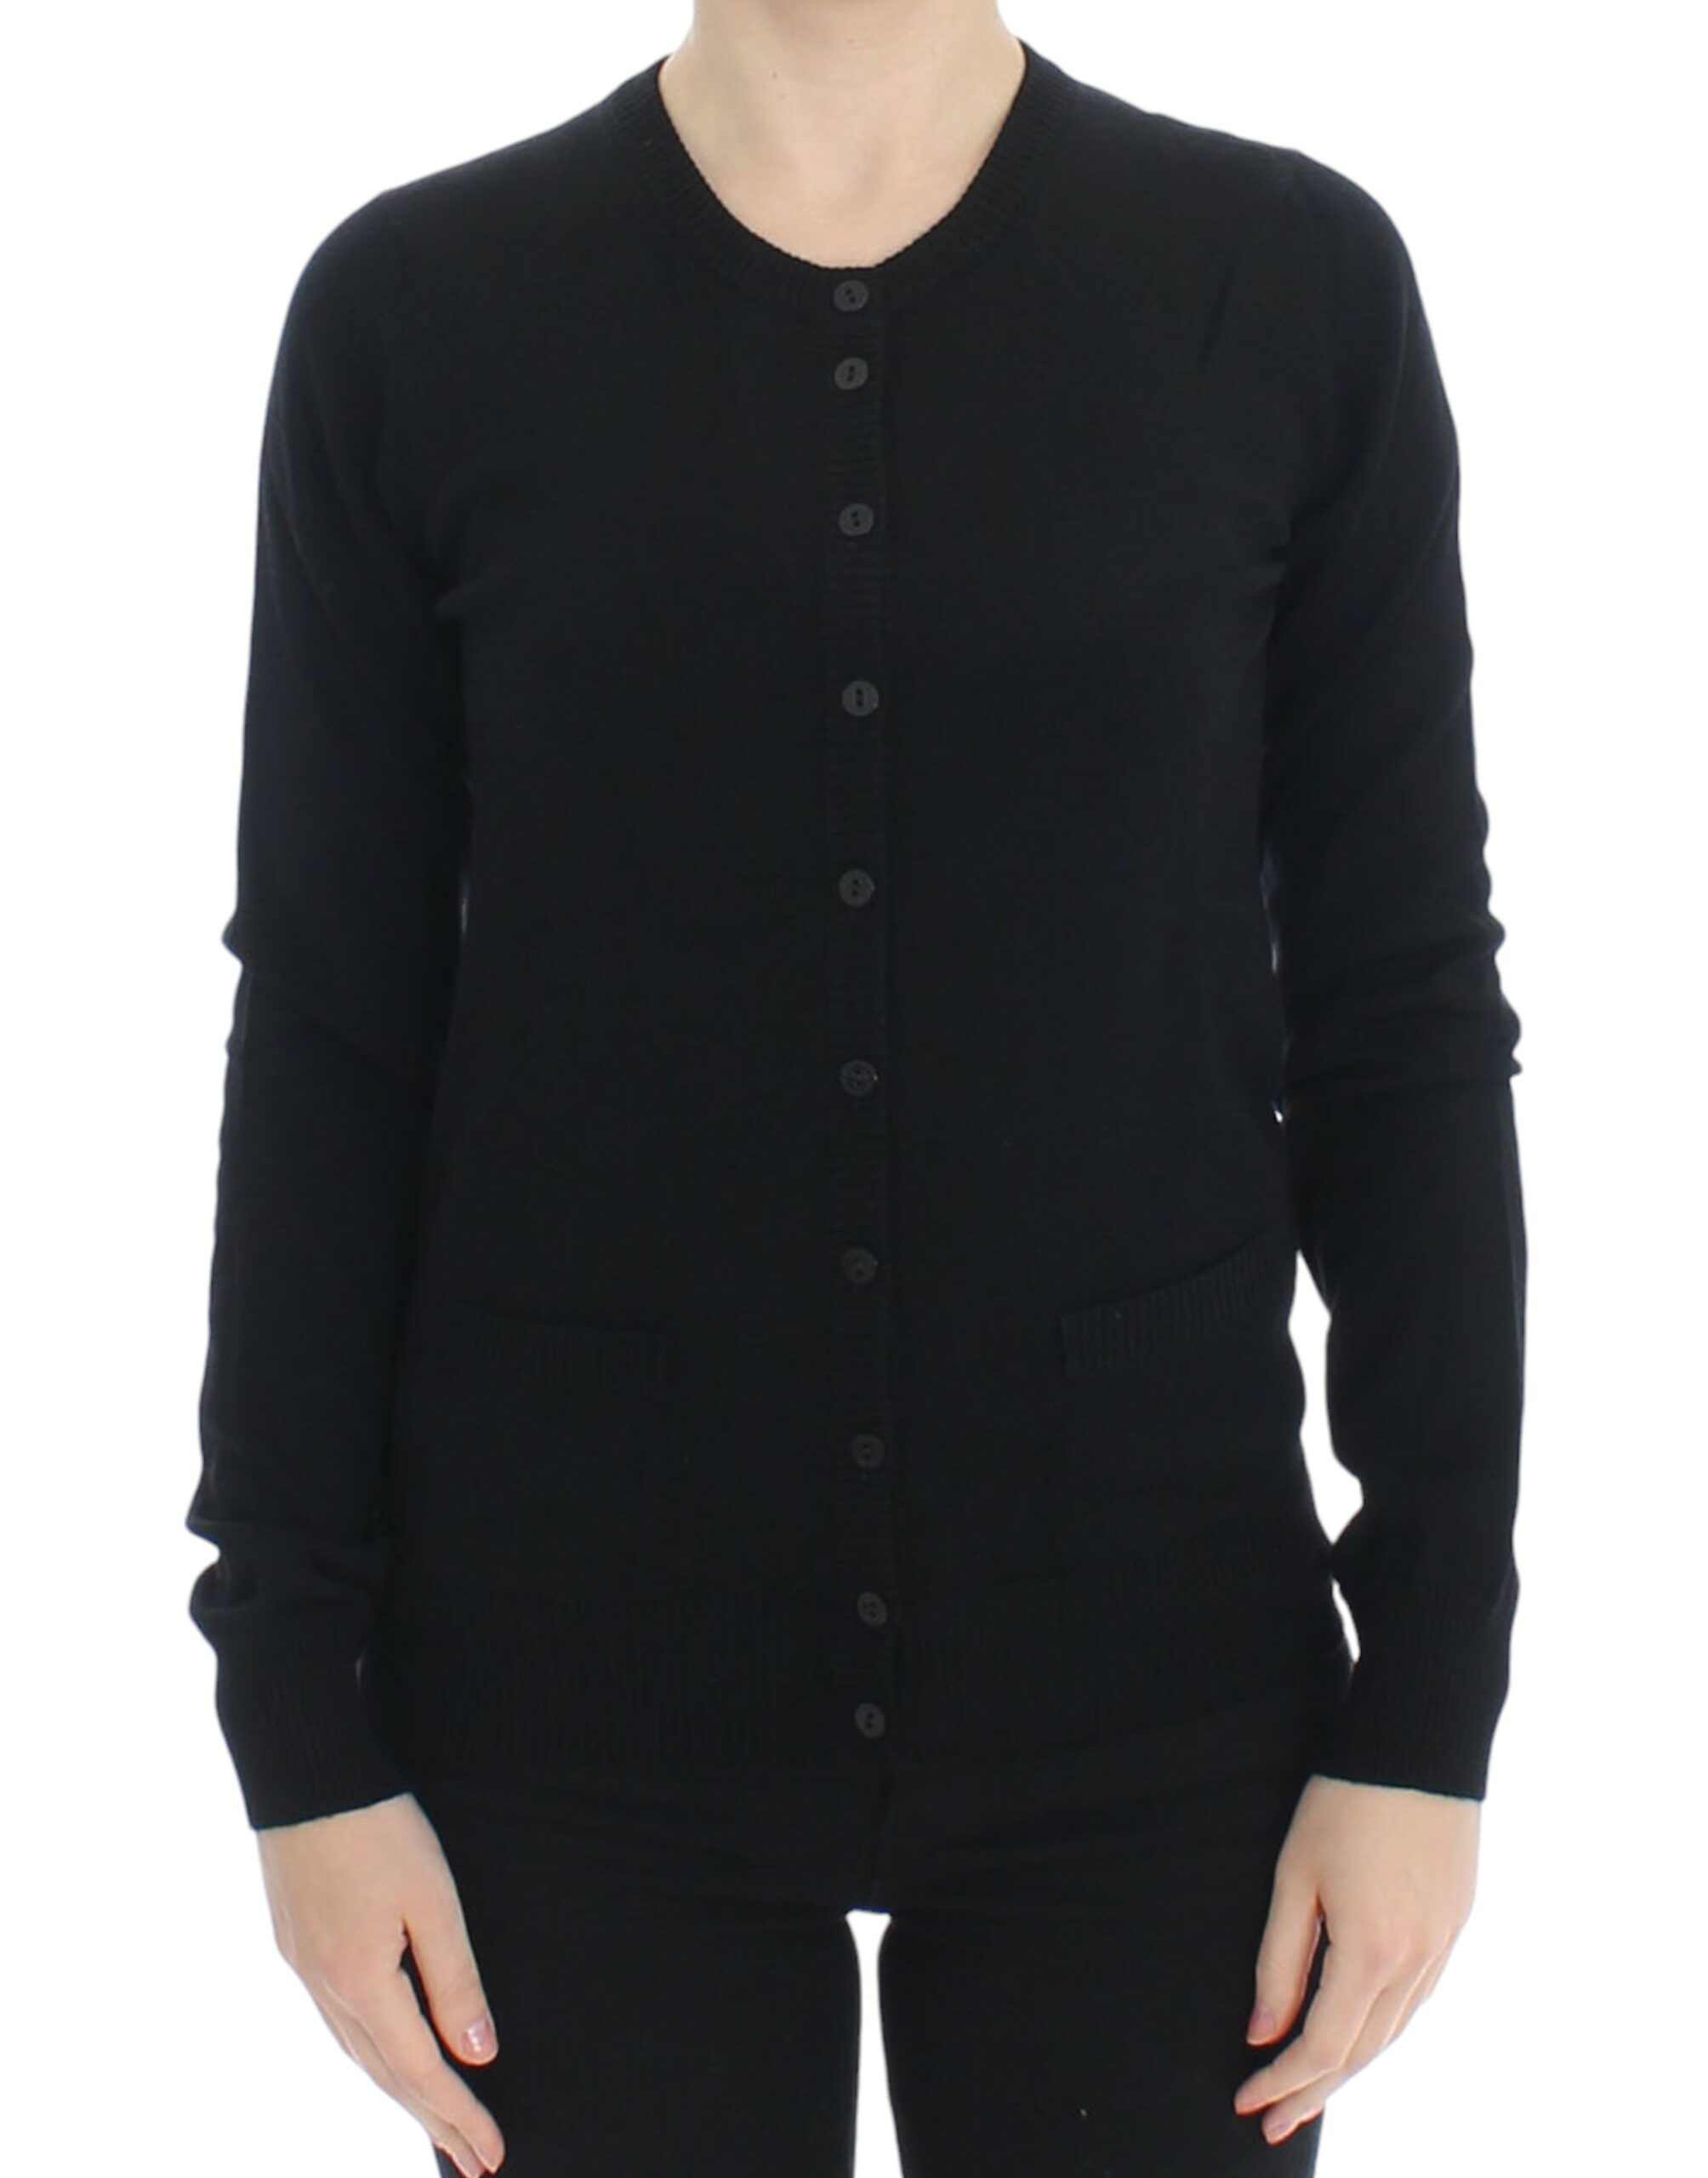 Black Dolce & Gabbana Elegant Black Wool Cardigan Sweater IT46|XL